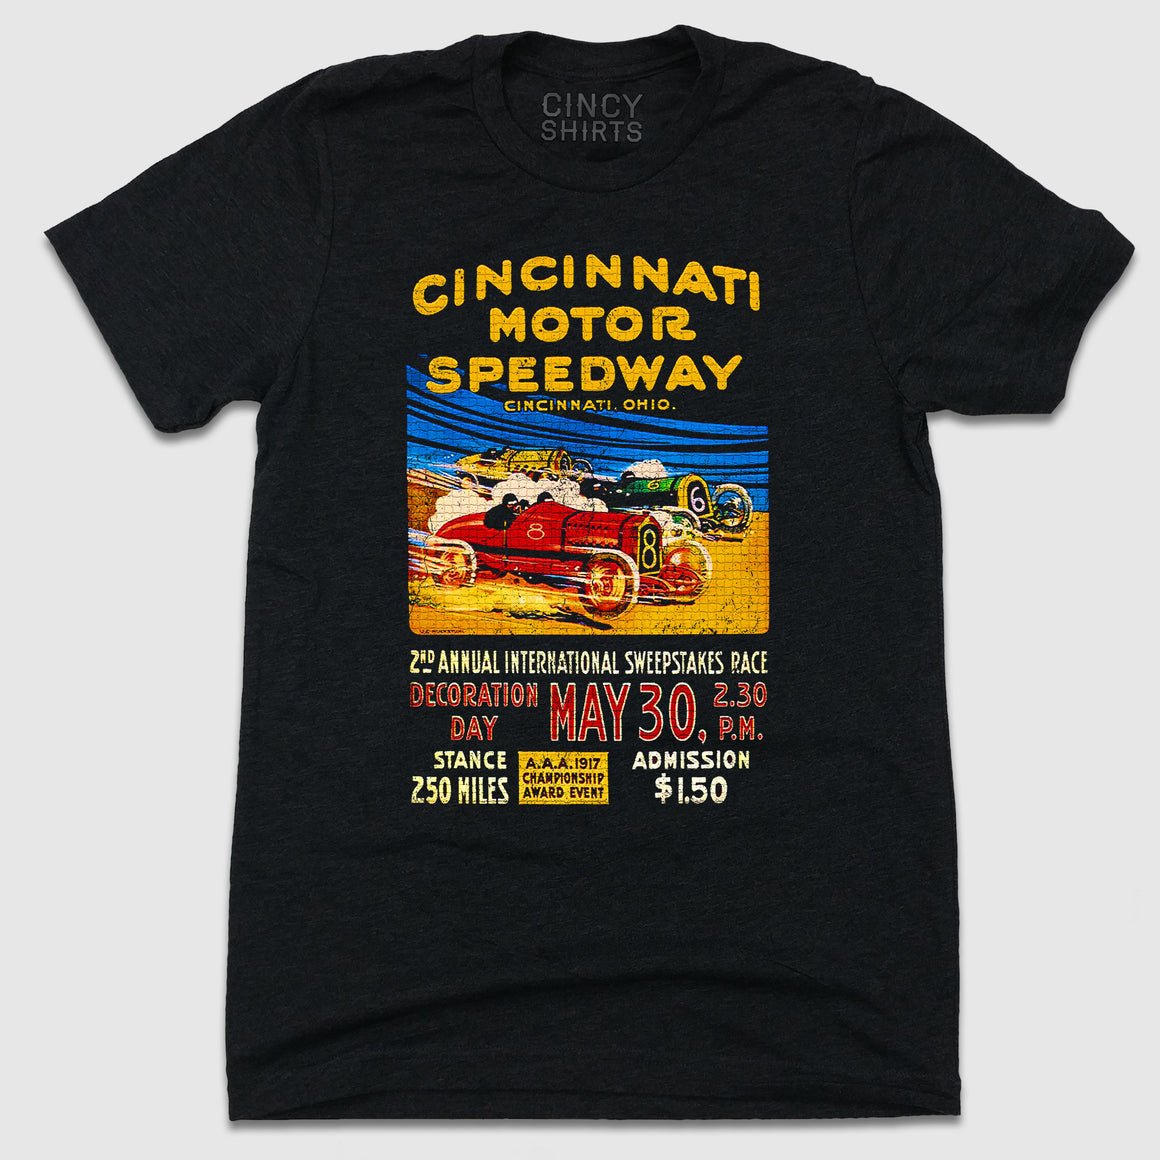 Cincinnati Motor Speedway - Cincy Shirts